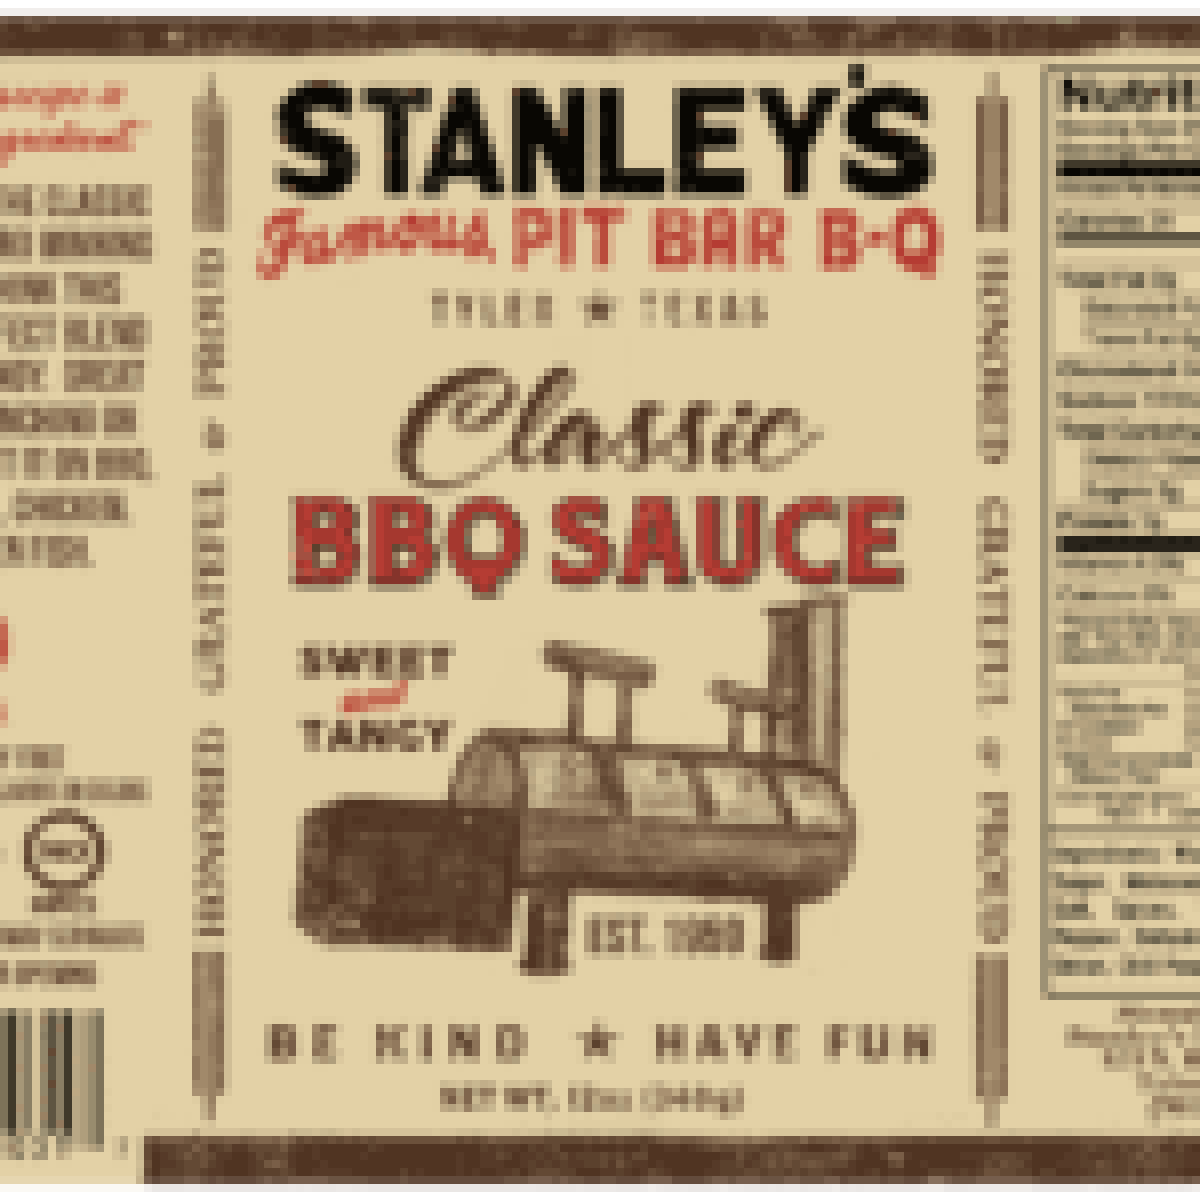 Stanley's Famous BBQ Sauce